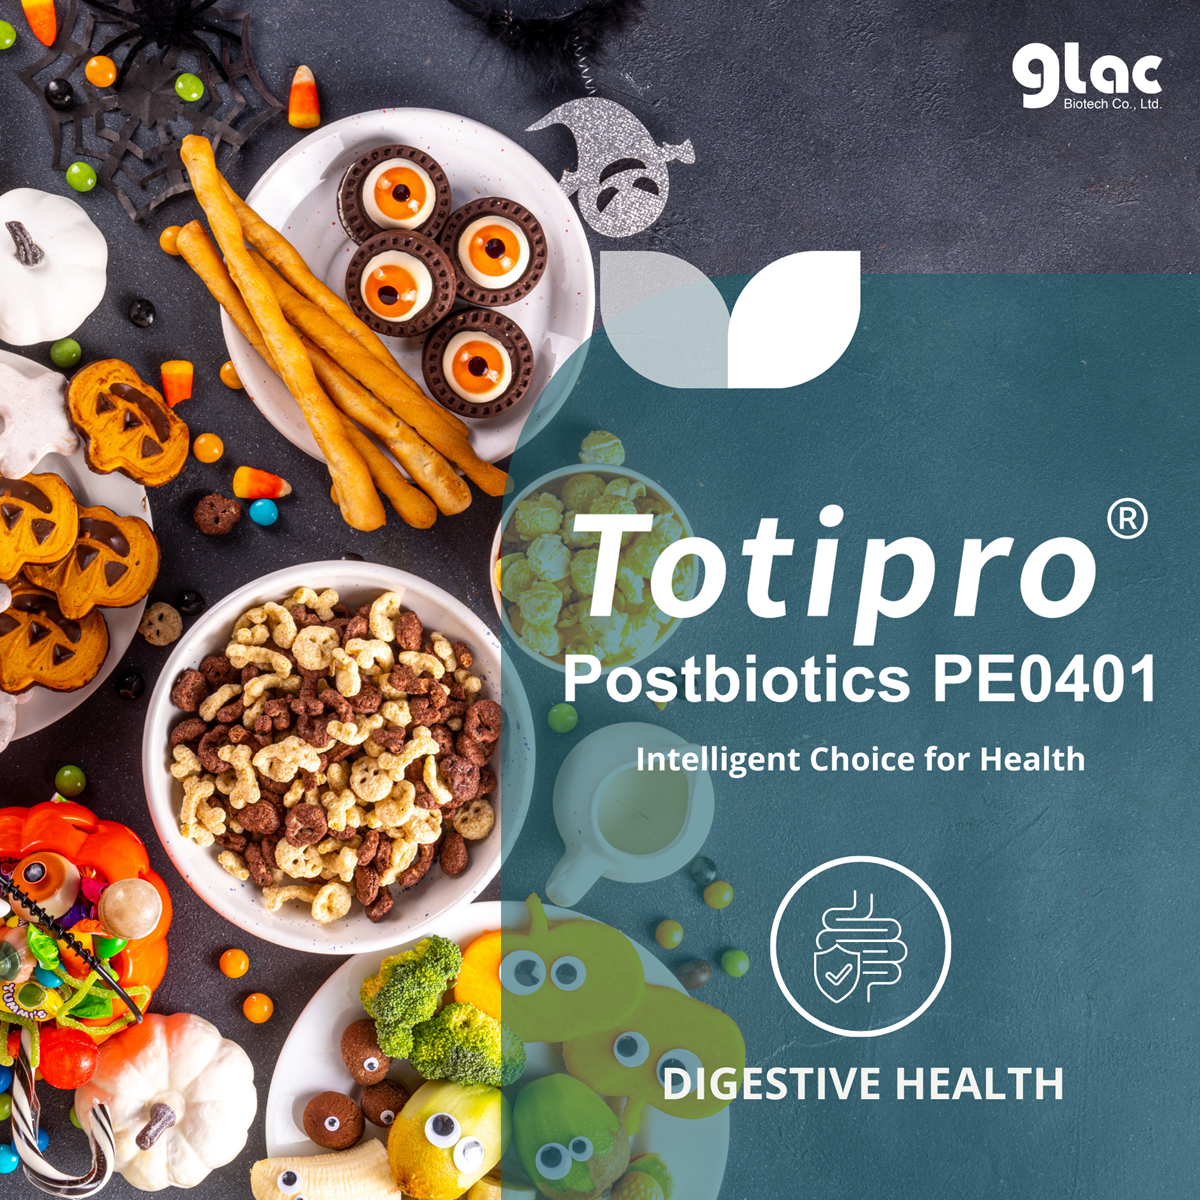 Totipro®Postbiotics PE0401 for Digestive Health Application